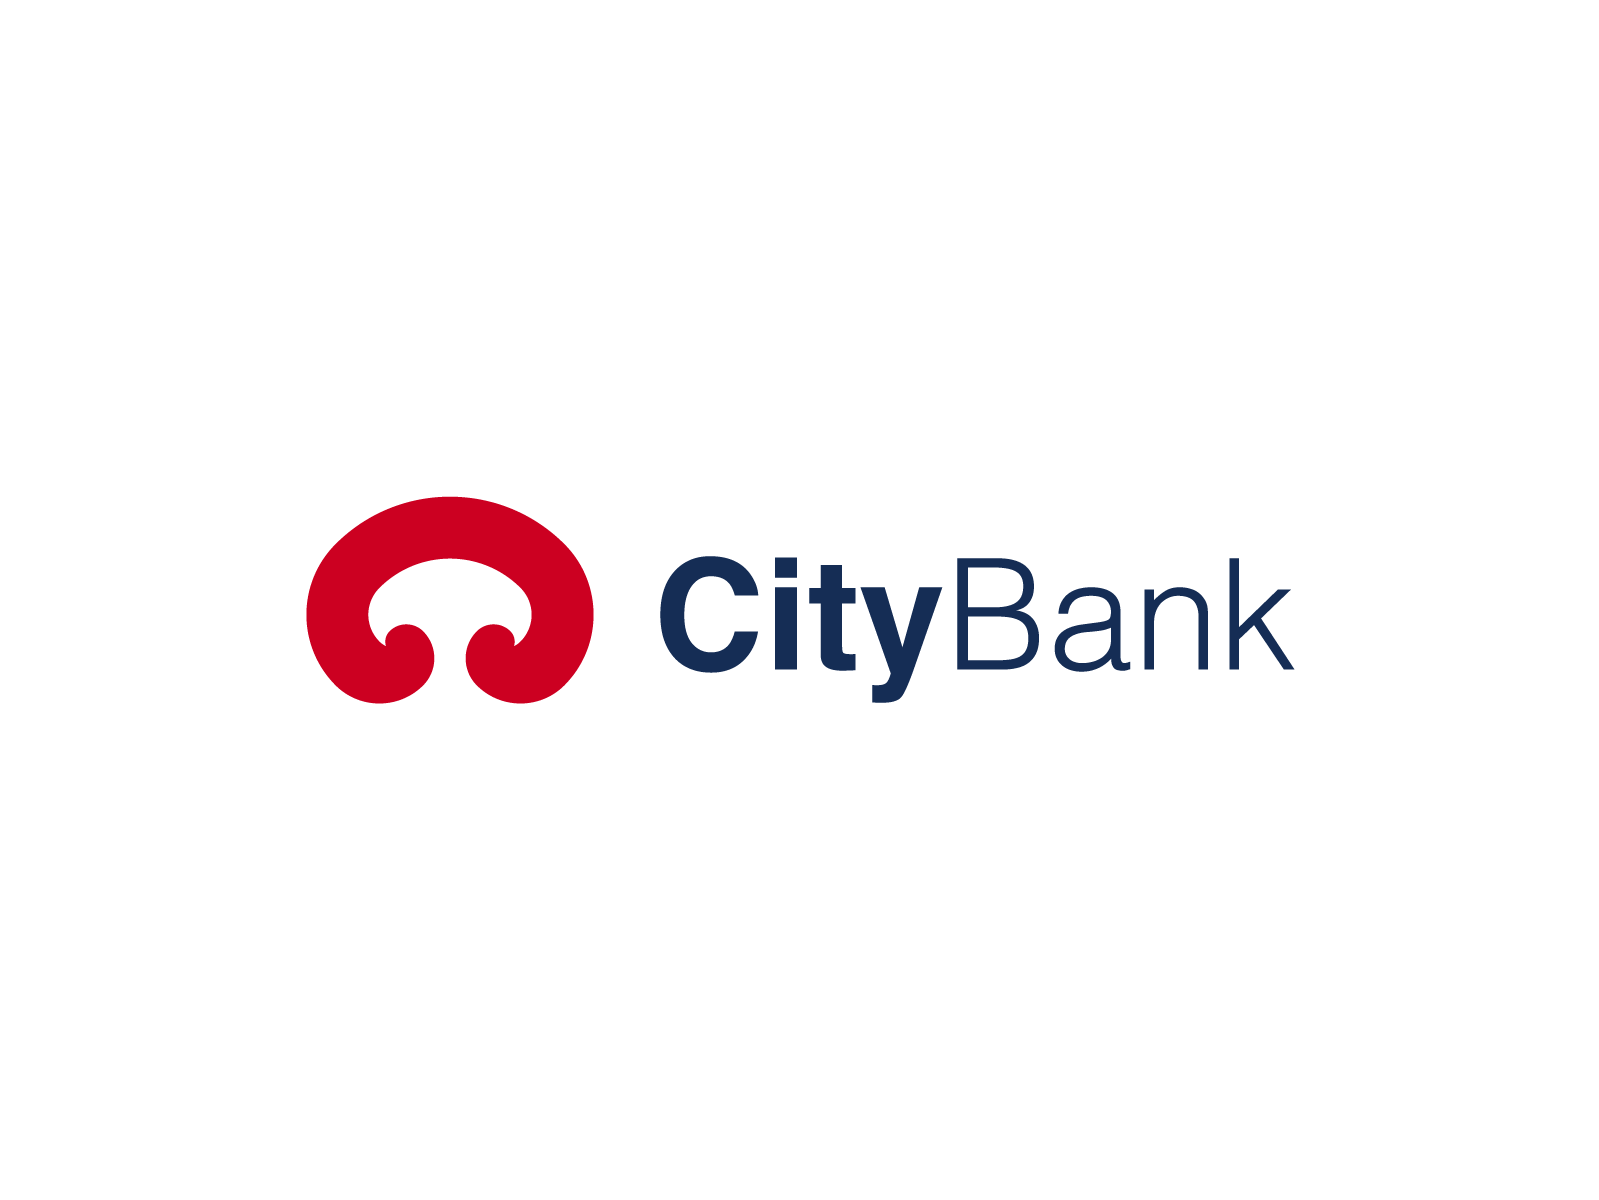 CityBank Logo Design Bangladesh | financial services by Keydola.com on ...